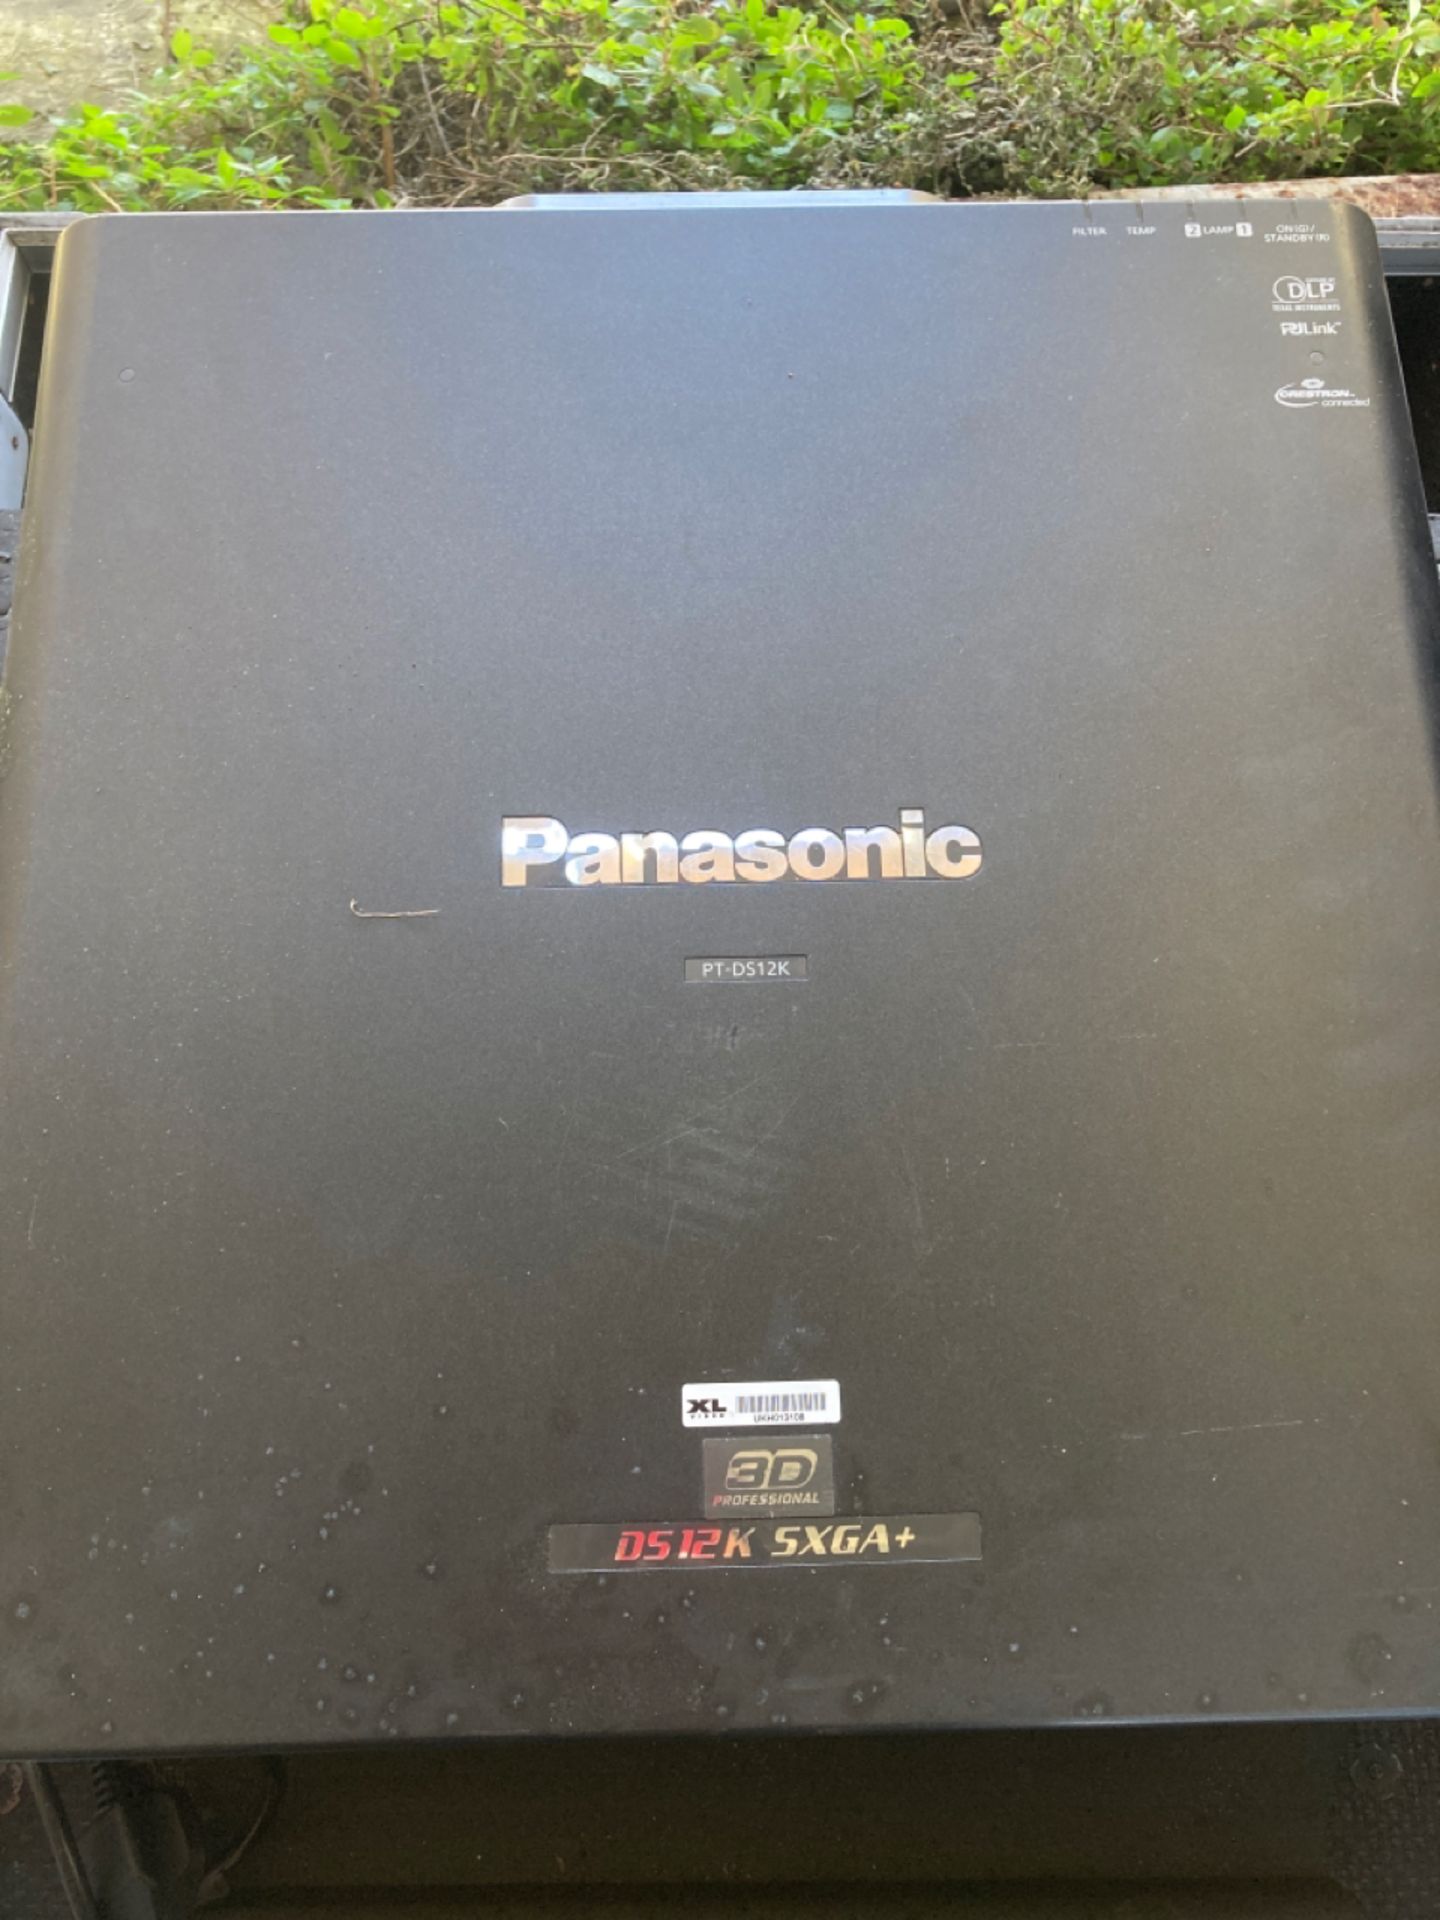 Panasonic projector 3-D - Image 3 of 4